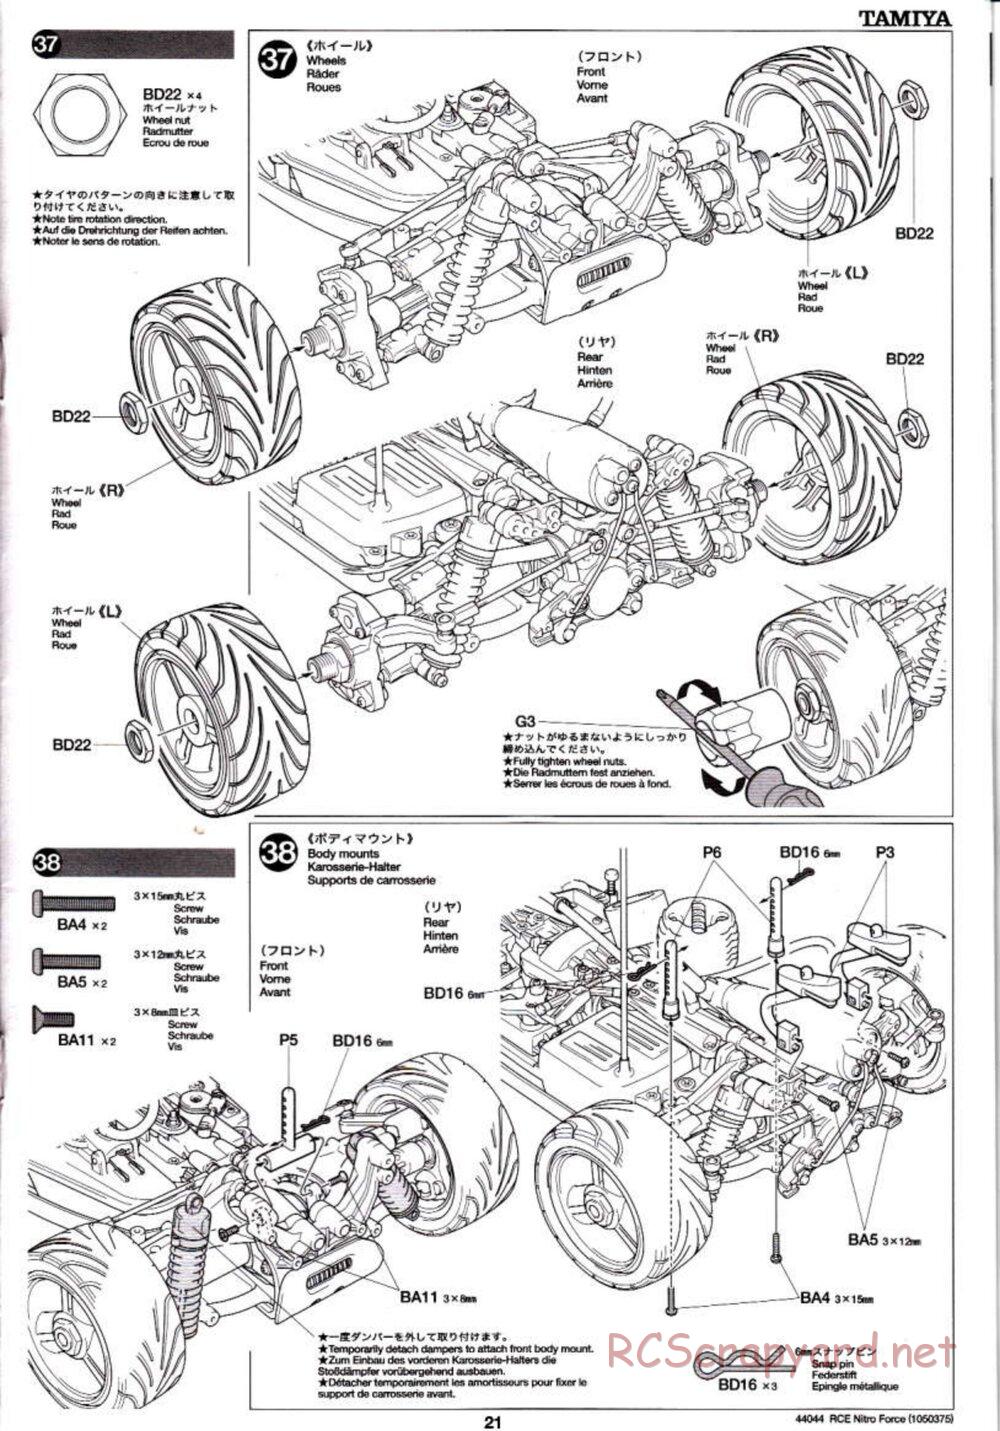 Tamiya - Nitro Force - NDF-01 Chassis - Manual - Page 21